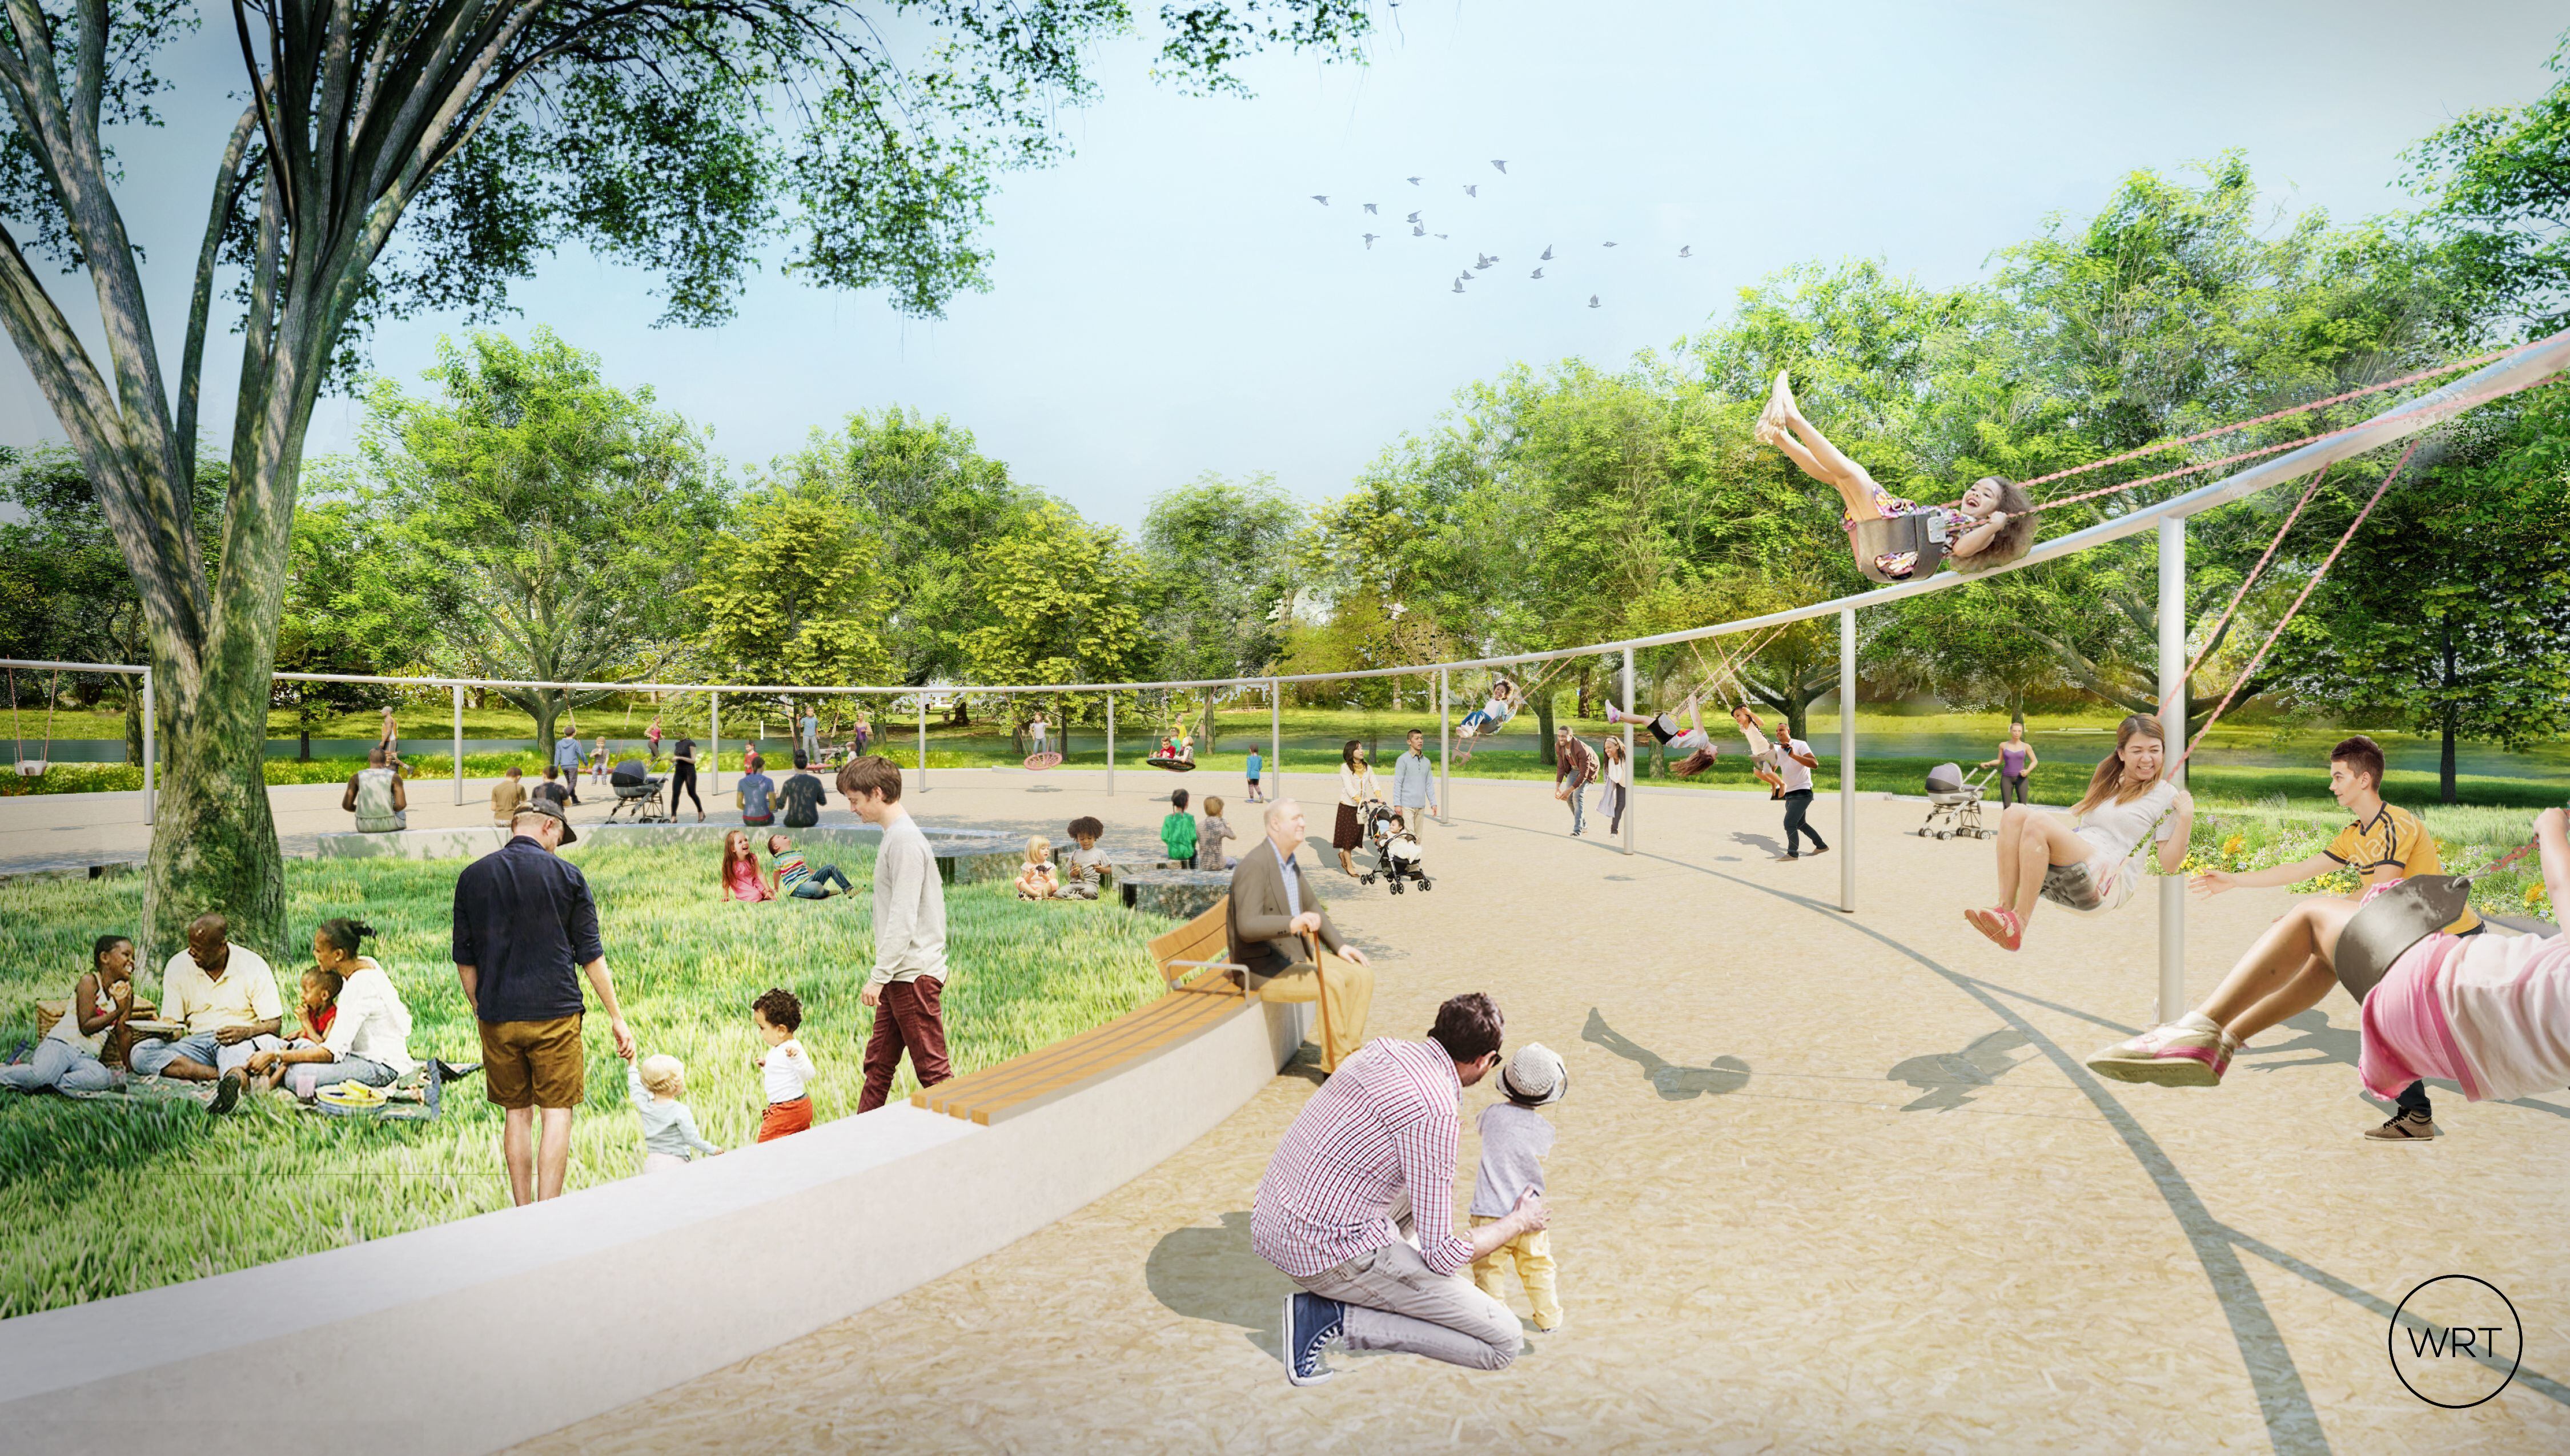 FDR Park renovation includes 'Megaswing,' largest swing set in